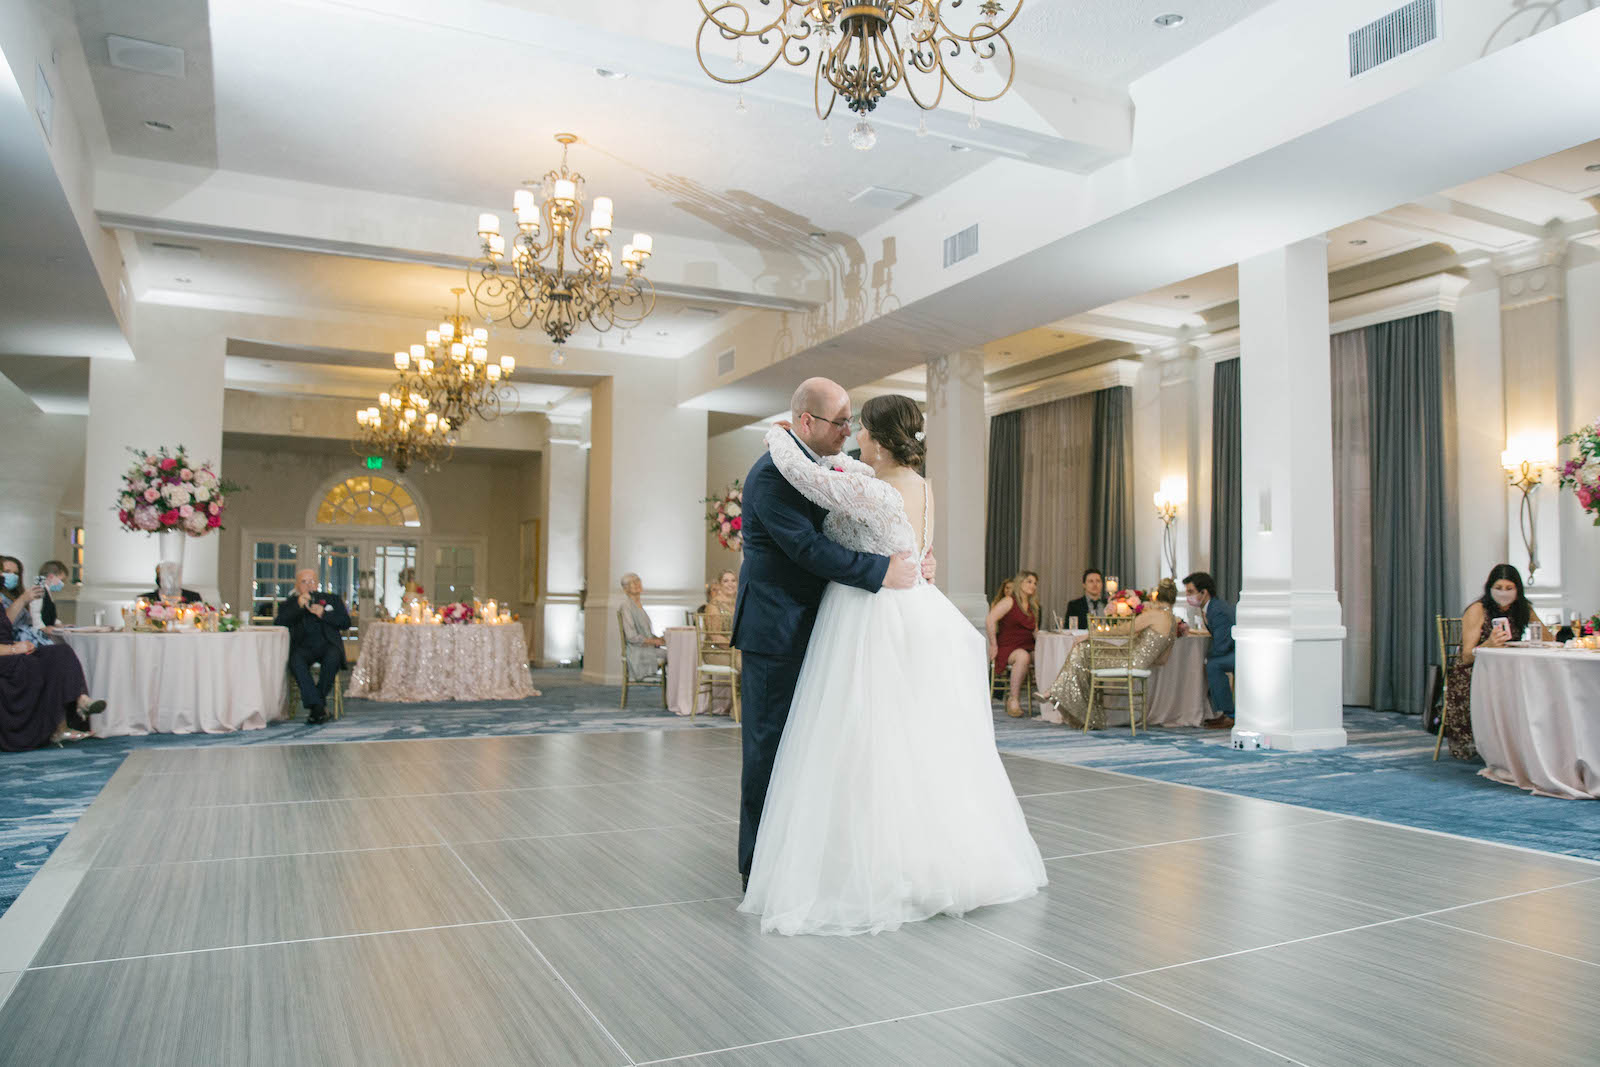 Bride and Groom First Dance Wedding Photo | Historic St. Pete Wedding Venue The Don Cesar | Tampa Bay Wedding DJ Grant Hemond and Associates